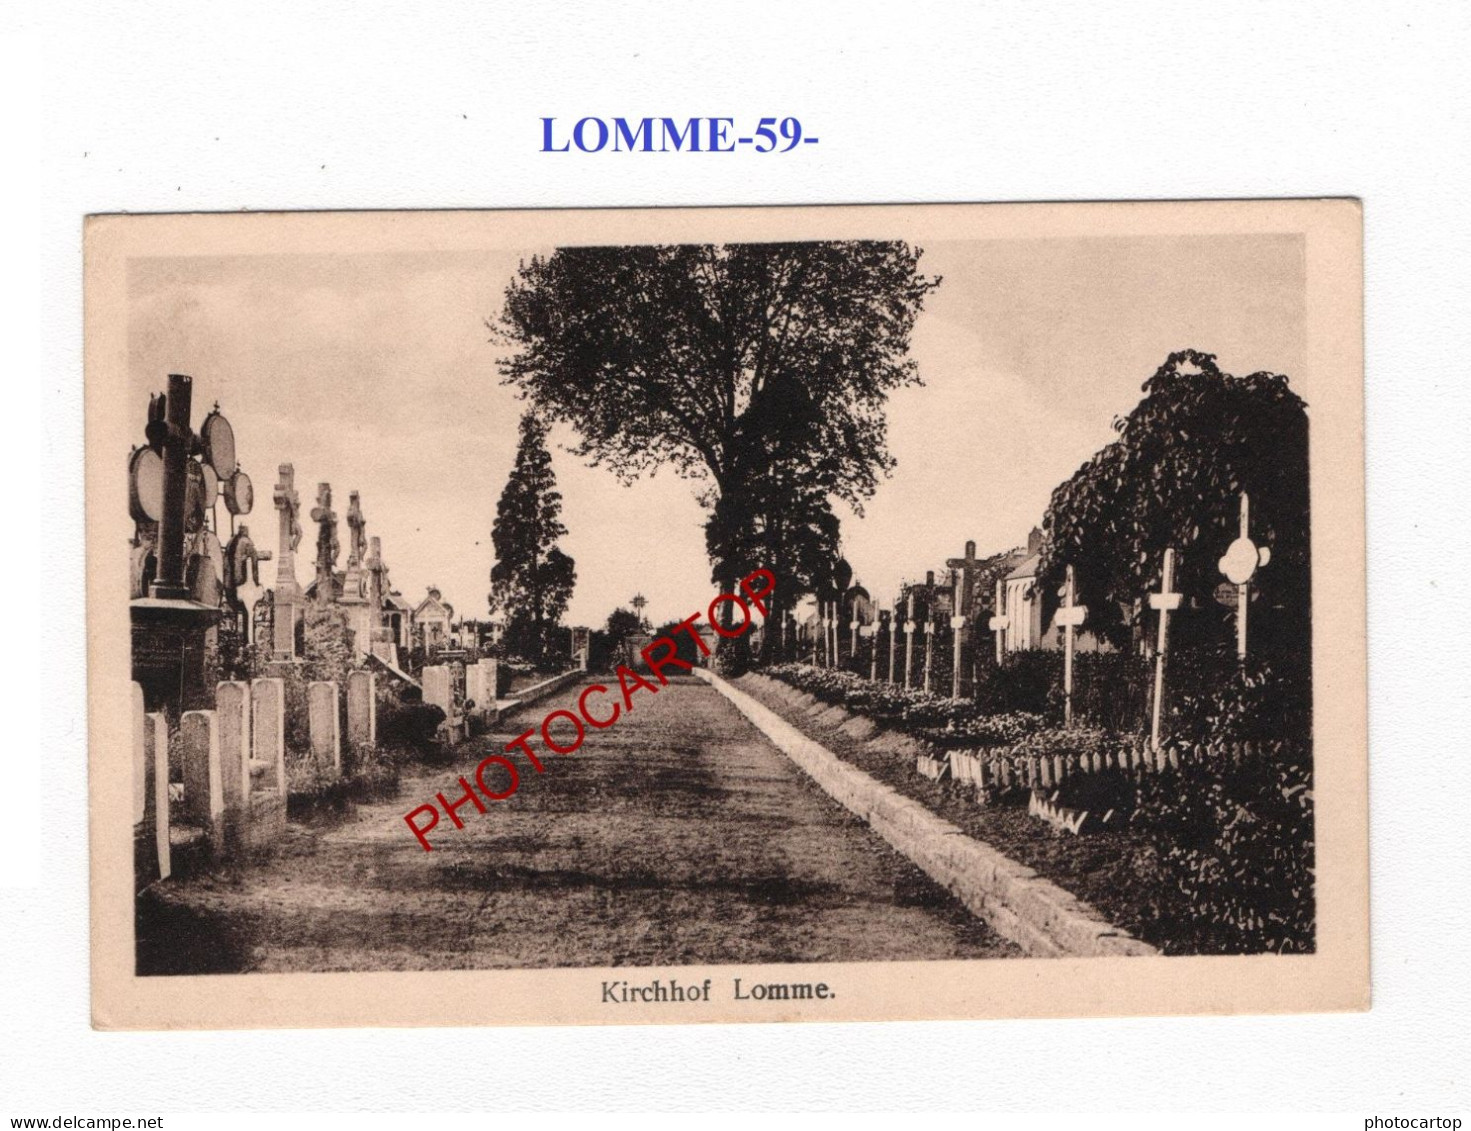 LOMME-59-Tombes-Cimetiere-CARTE Imprimee Allemande-GUERRE 14-18-1 WK-MILITARIA- - War Cemeteries